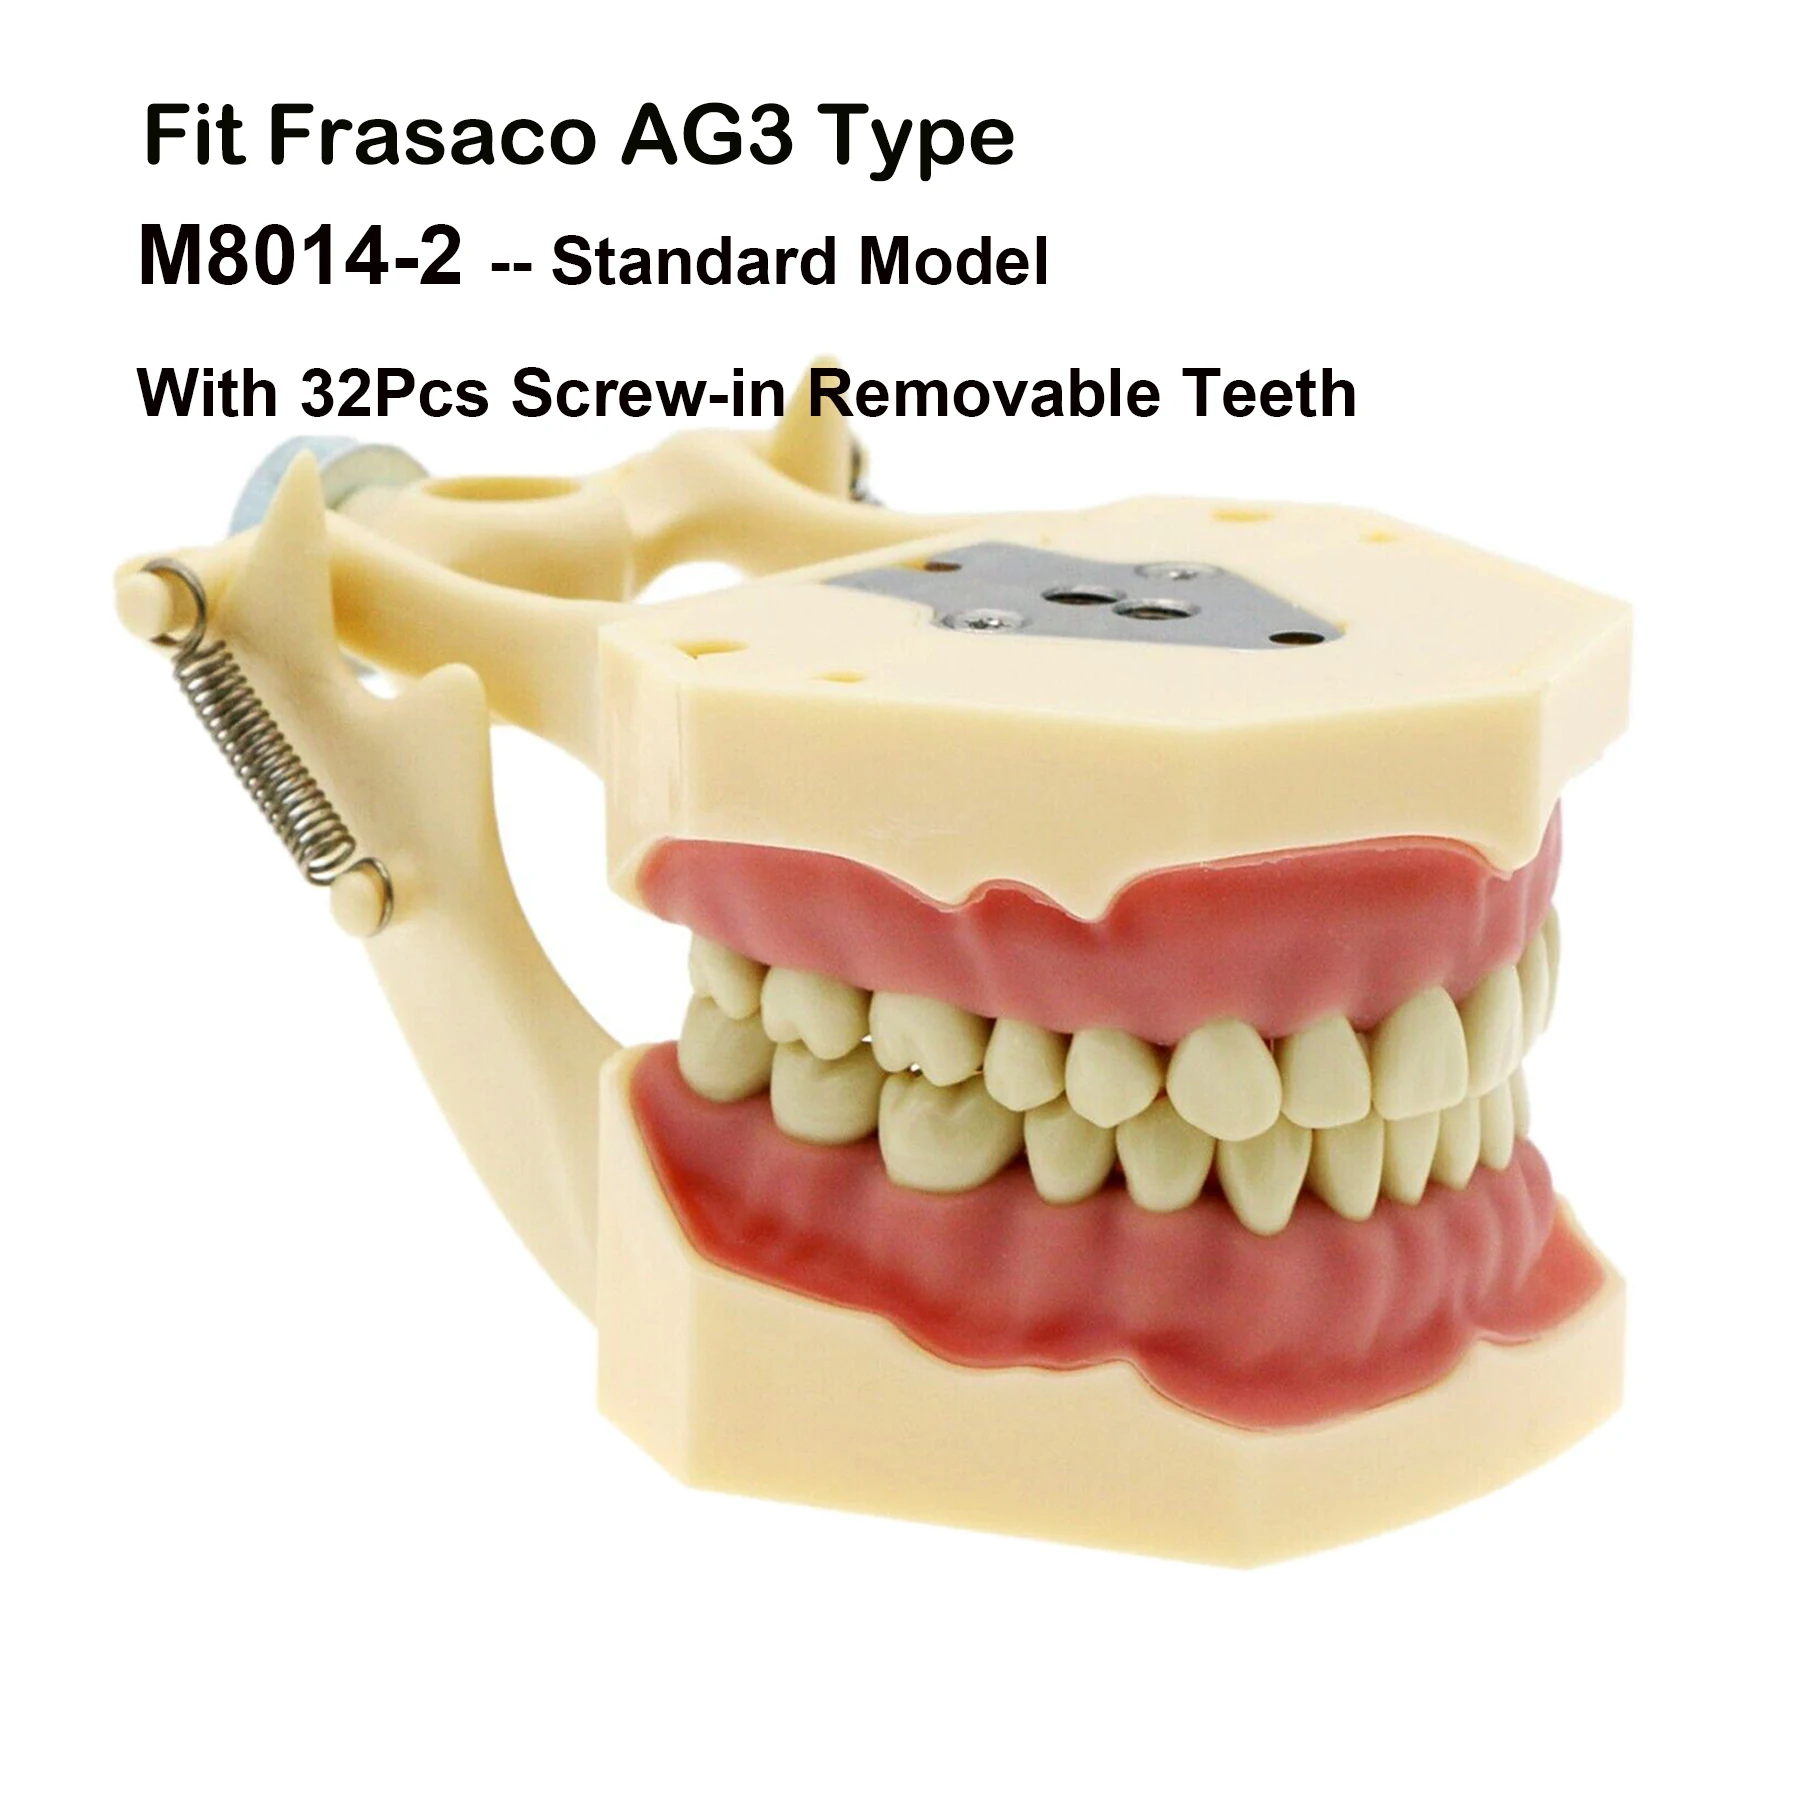 Frasaco AG3 Type Fit Dental Standard Model 32Pcs Screw-in Teeth Practice Filling Typodont Restoration Demo M8014-2 Teach Study